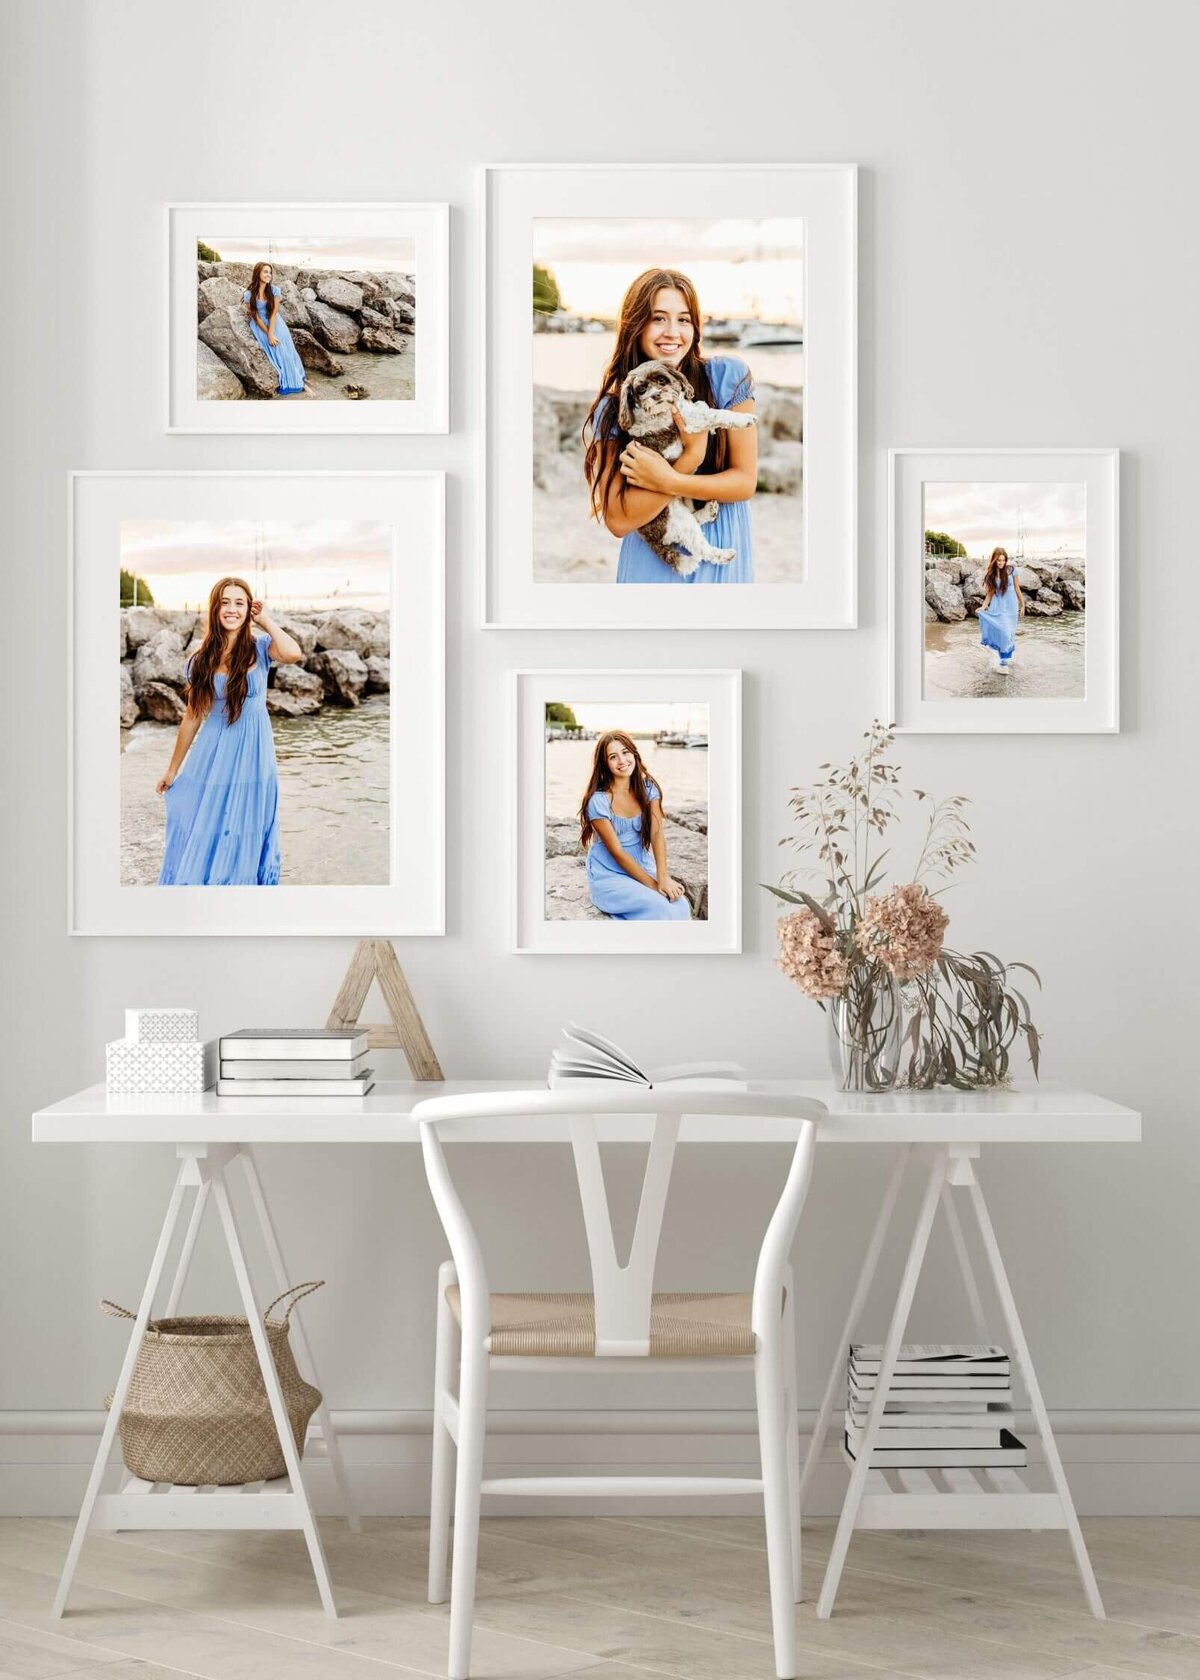 5 senior photos in white frames hanging above a desk